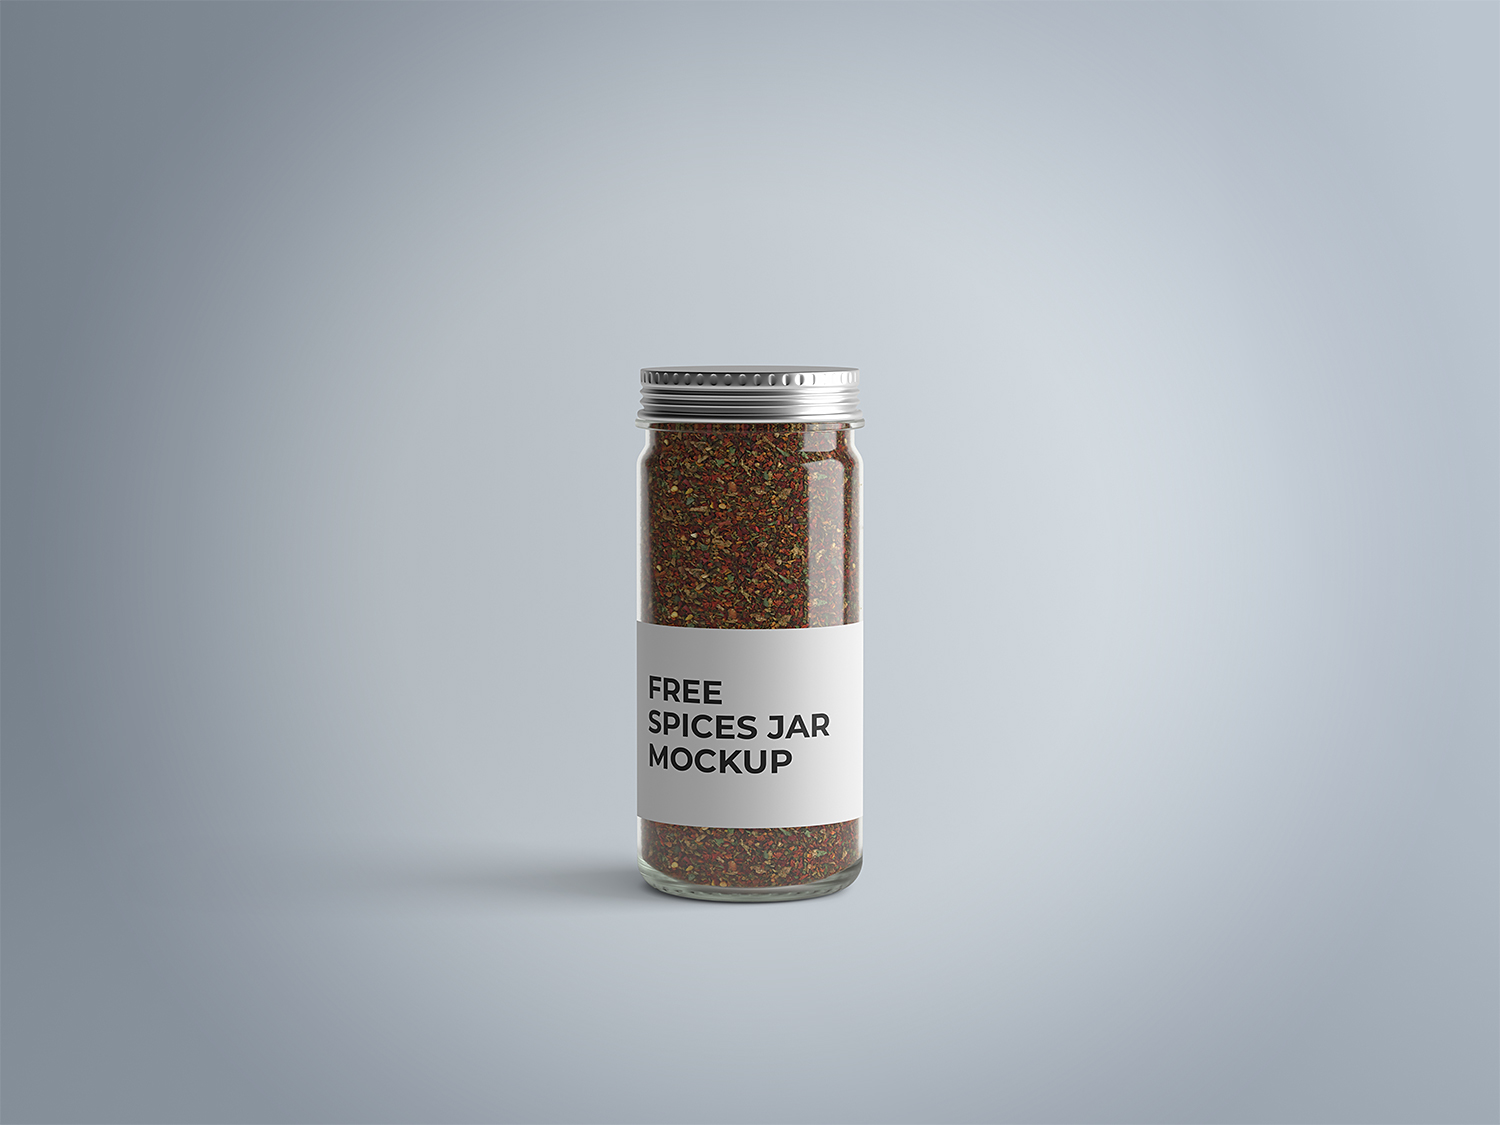 Download Free Spices Jar Mockup Free Mockup